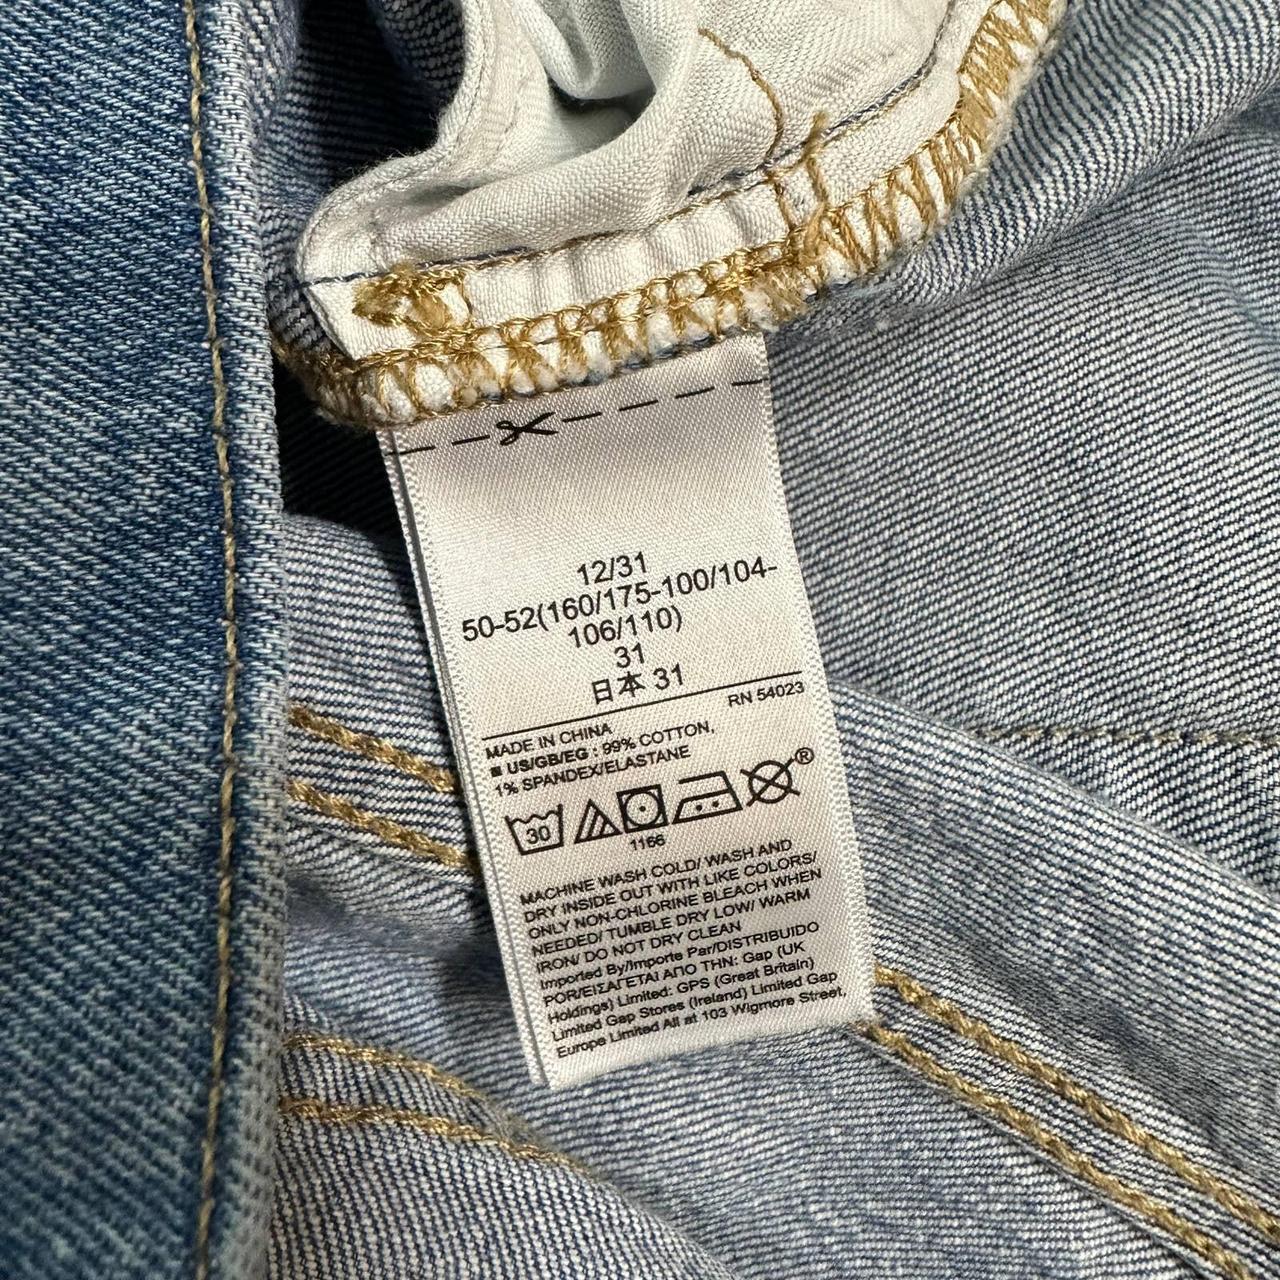 Gap Womens Blue Denim Jeans Size 31 - beyond exchange